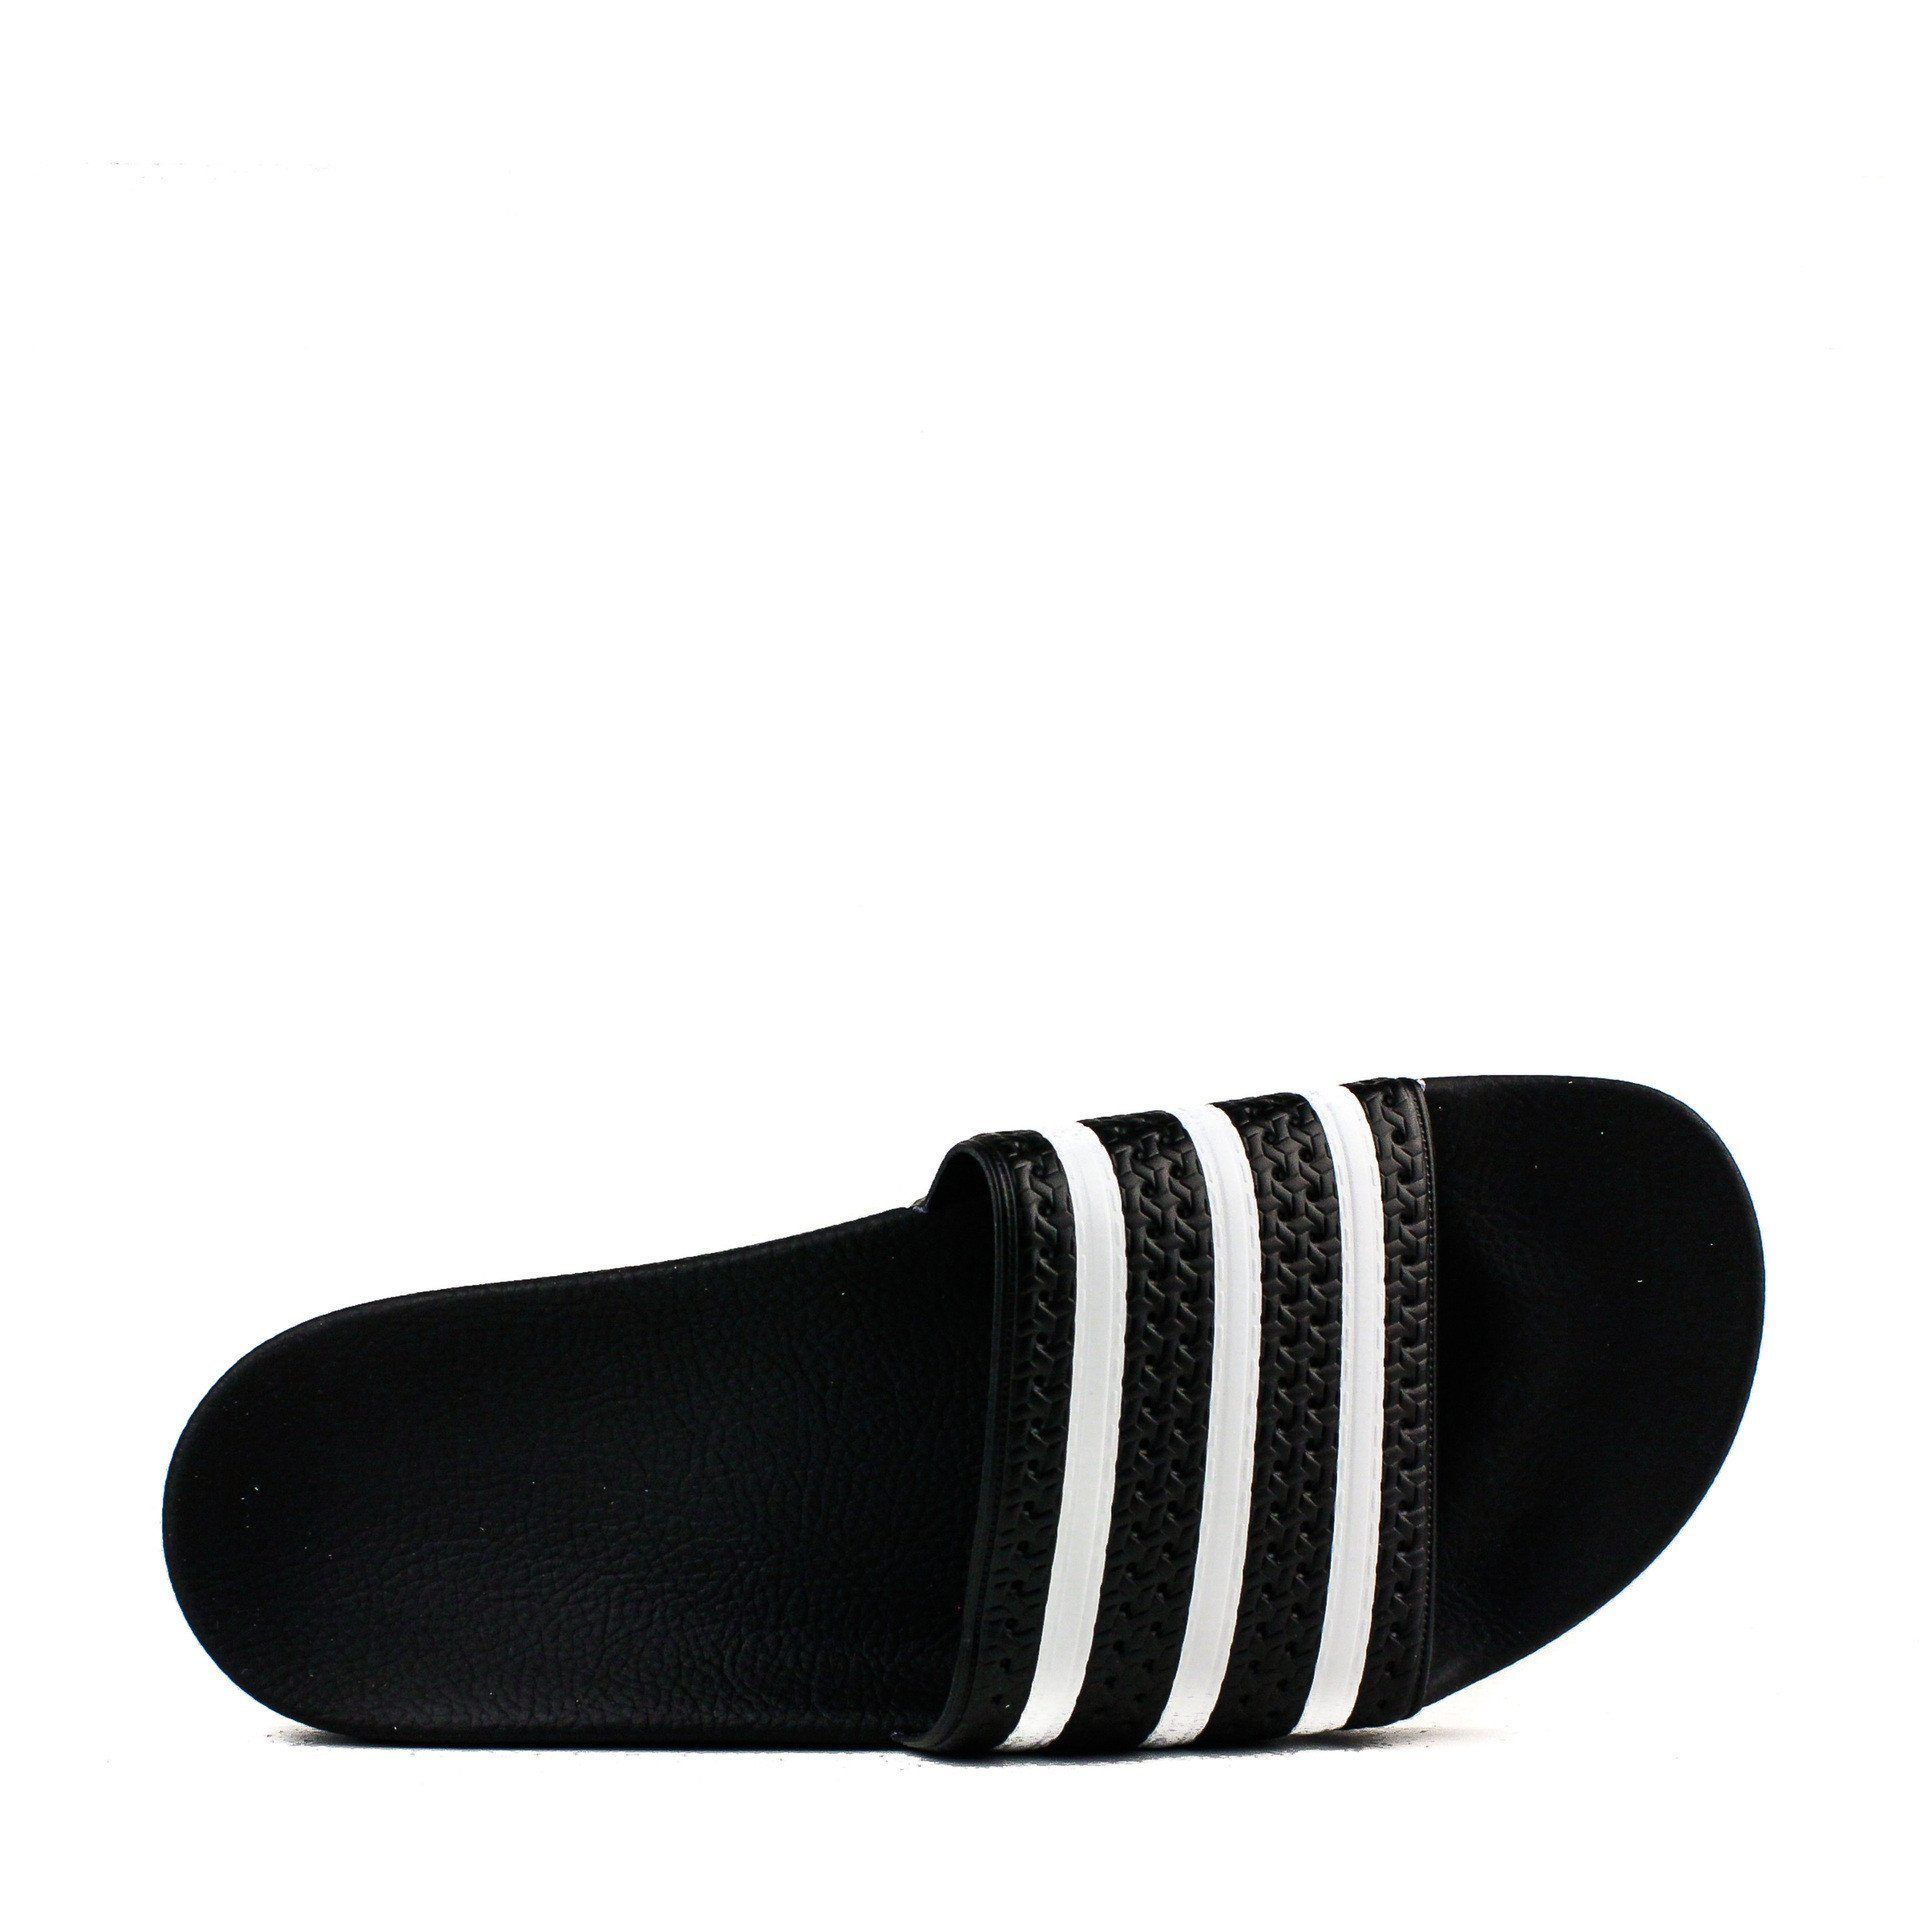 adidas originals gazelle in pale dress shoes - Adidas Originals Adilette Black Slides Made In Italy 280647 (Fast shipping) - MarbigenShops